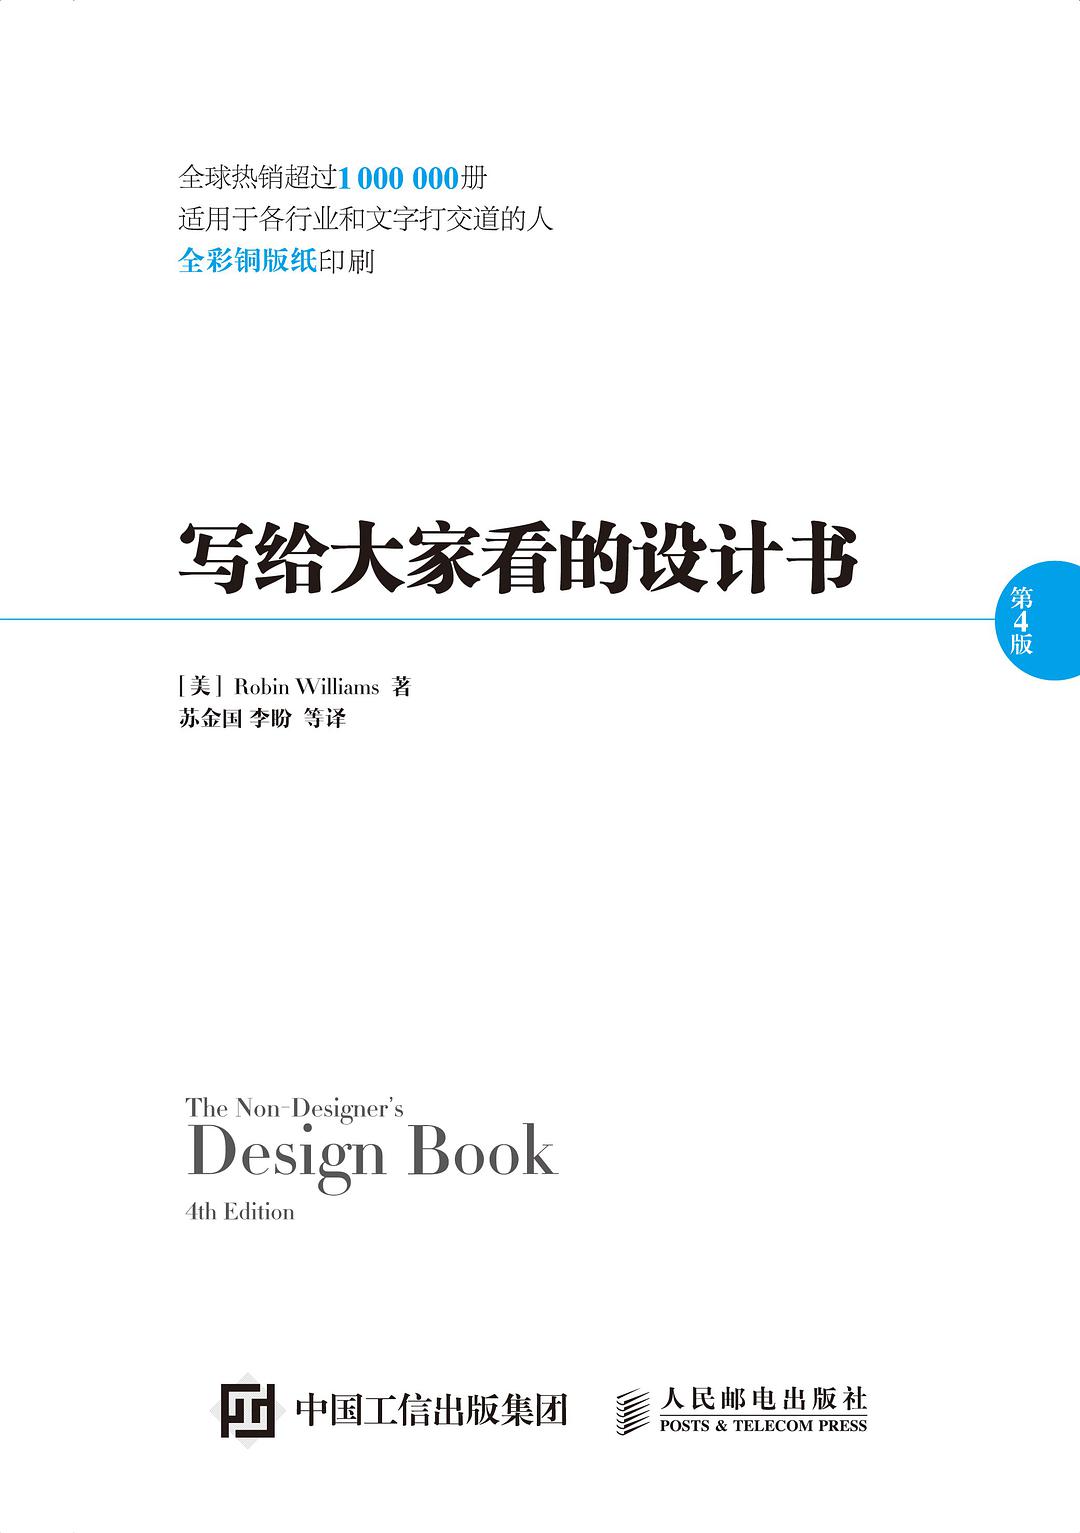 design-book.jpeg